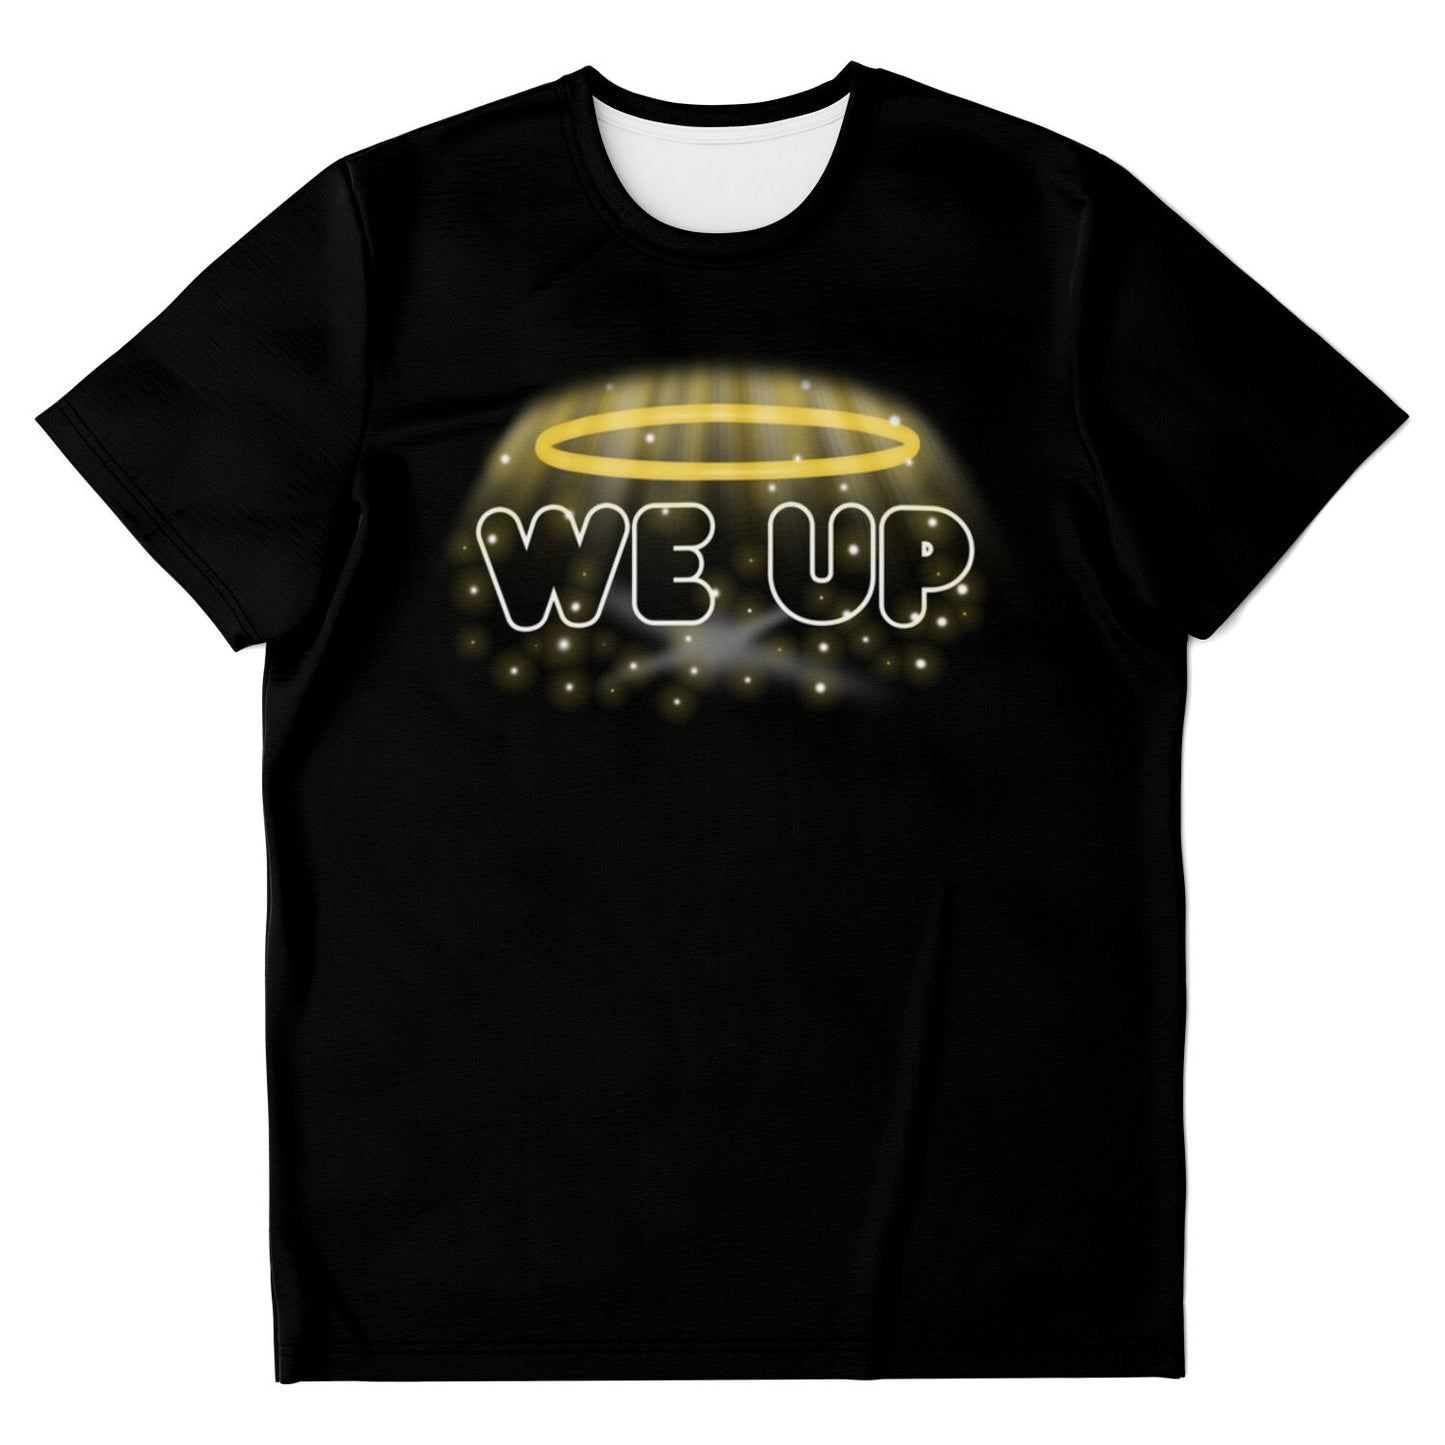 Adult Sharpy Dot 'We Up' T-shirt